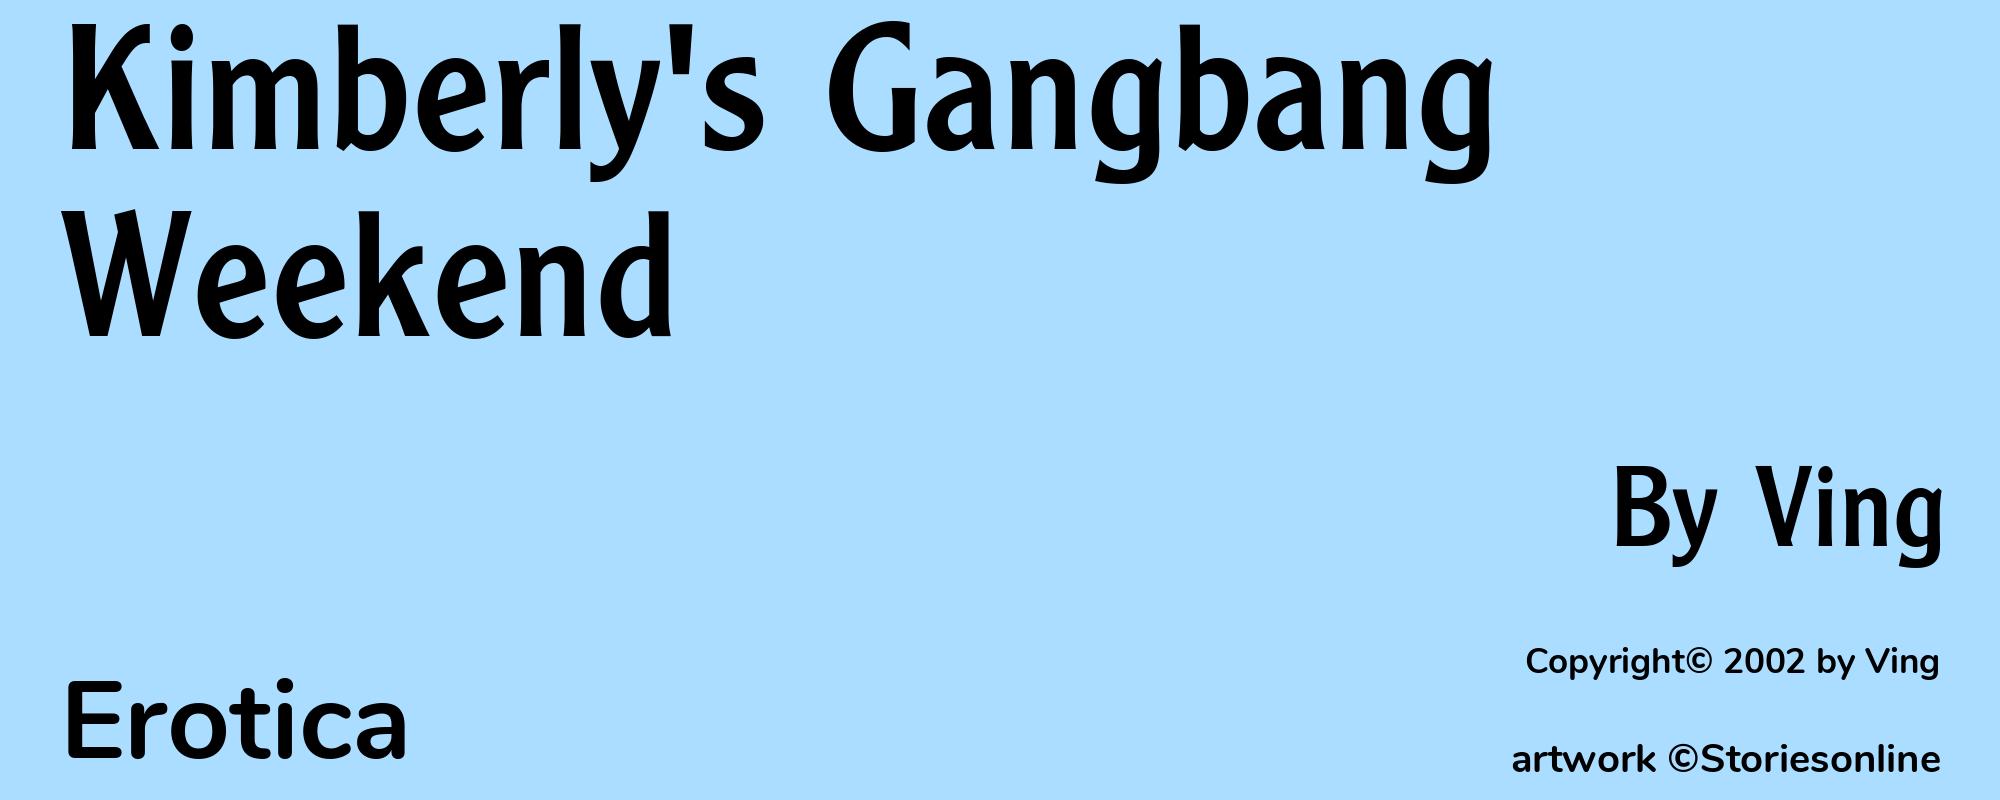 Kimberly's Gangbang Weekend - Cover